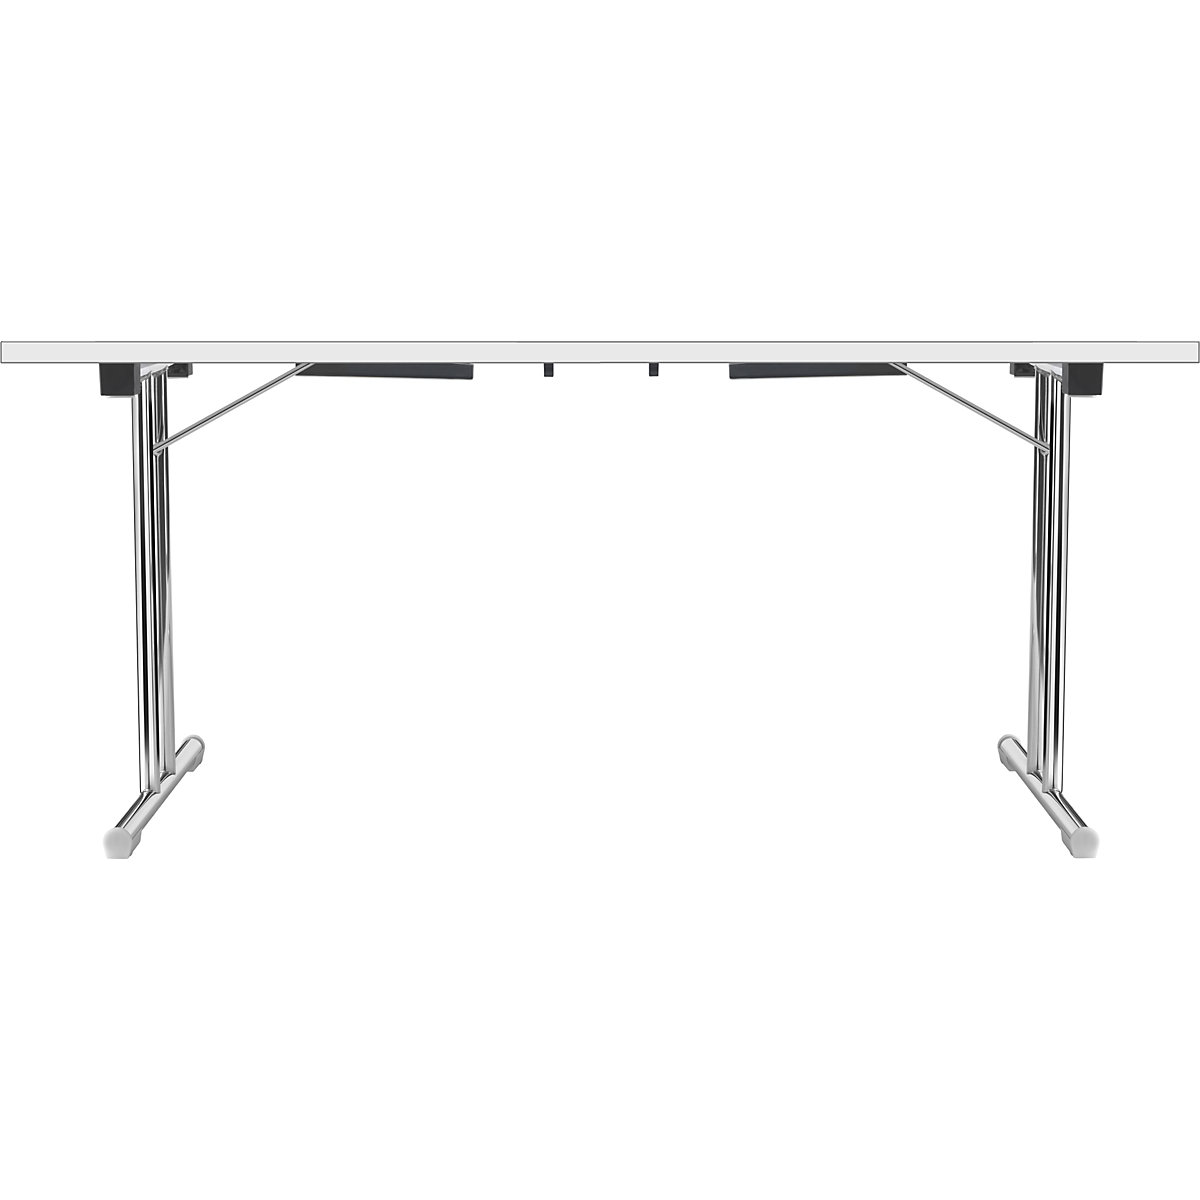 Inklapbare tafel met dubbel T-vormig onderstel, frame van staalbuis, verchroomd, wit/wit, b x d = 1400 x 700 mm-3